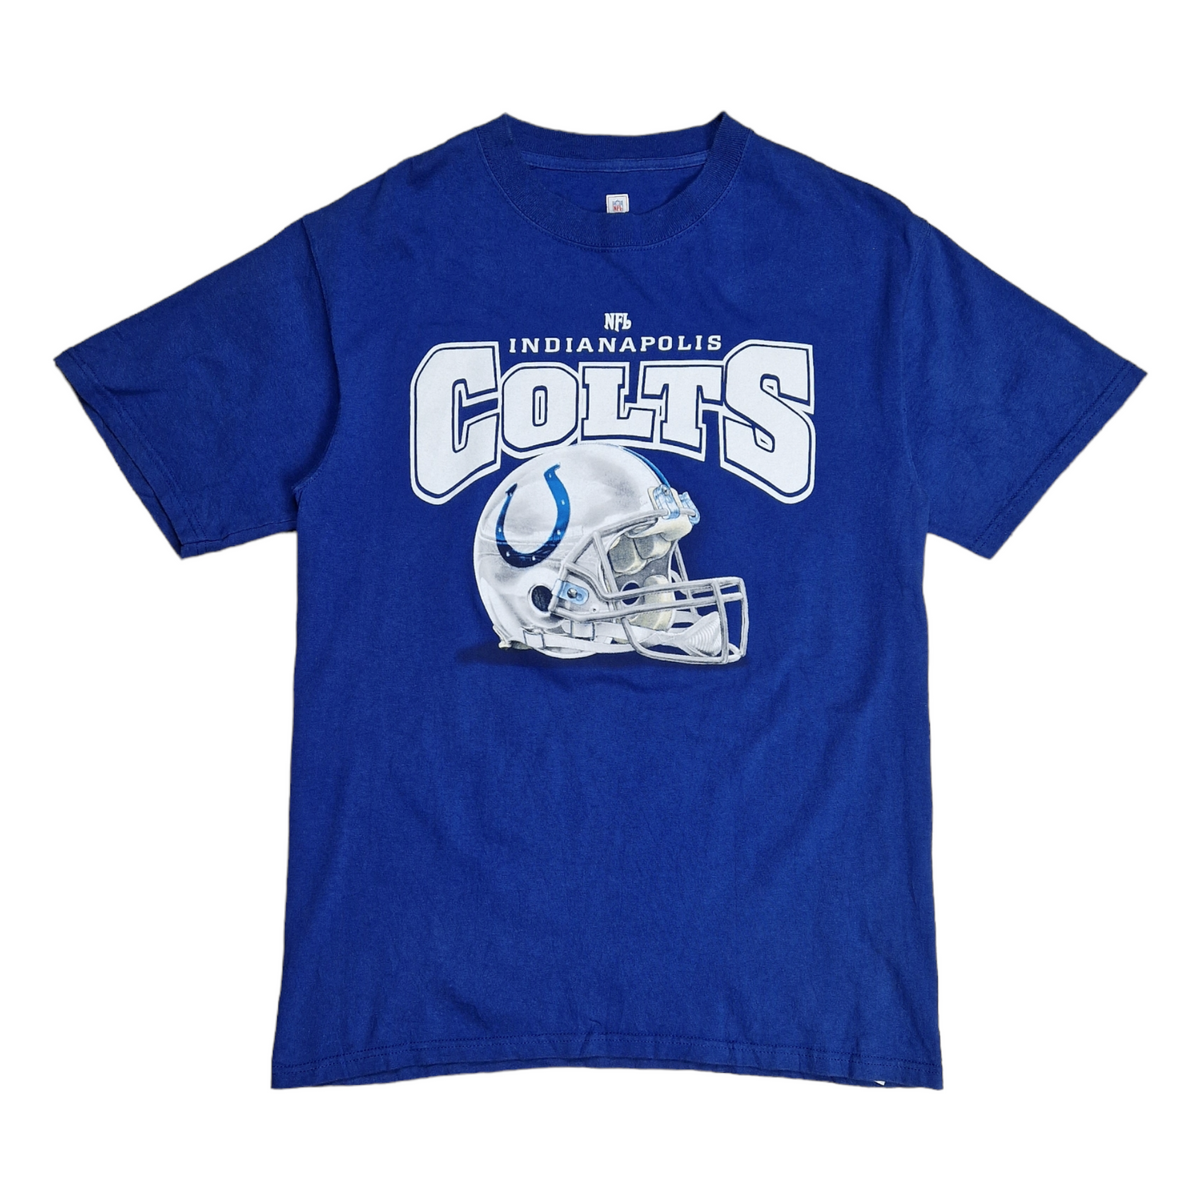 Y2K NFL Indianapolis Colts T-Shirt - Size Medium